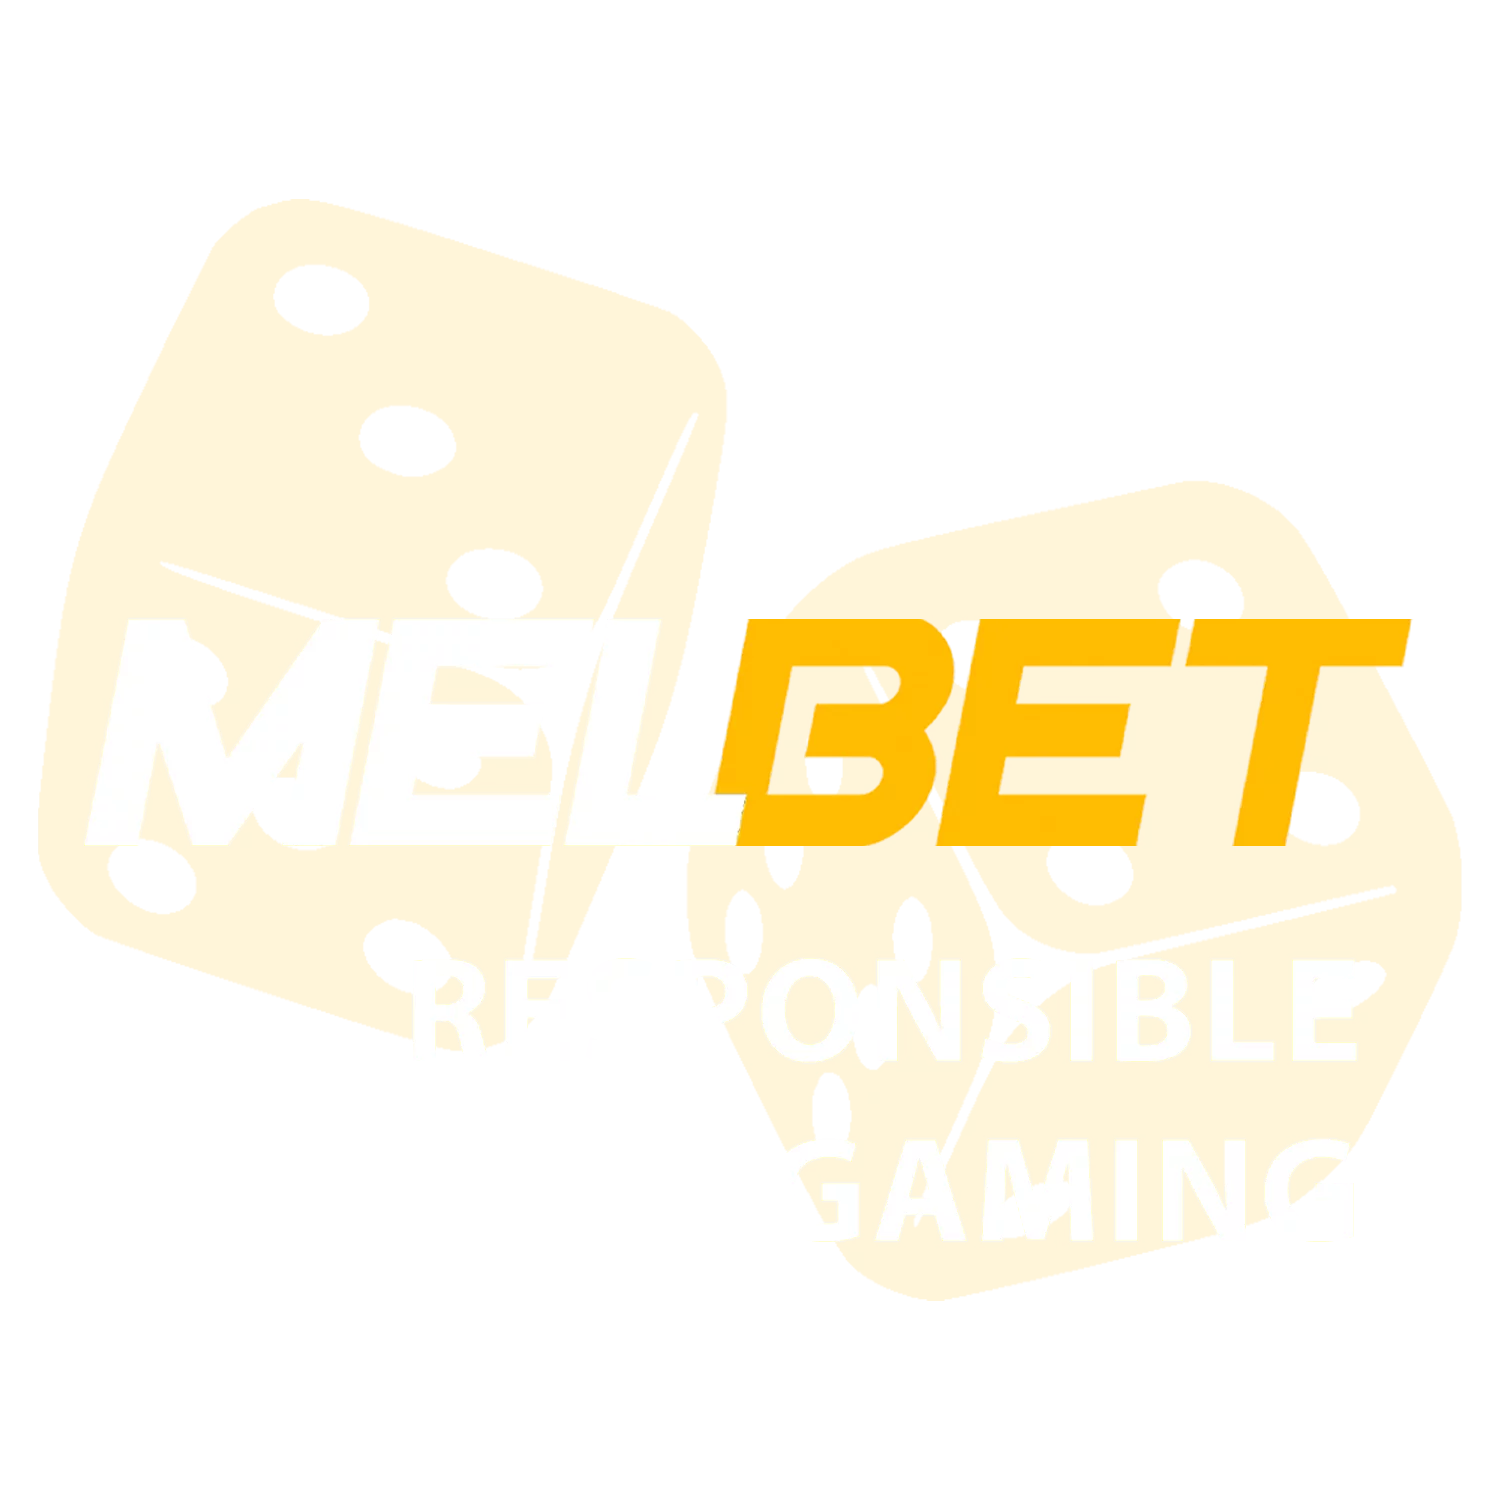 Gamble Responsible at Melbet.